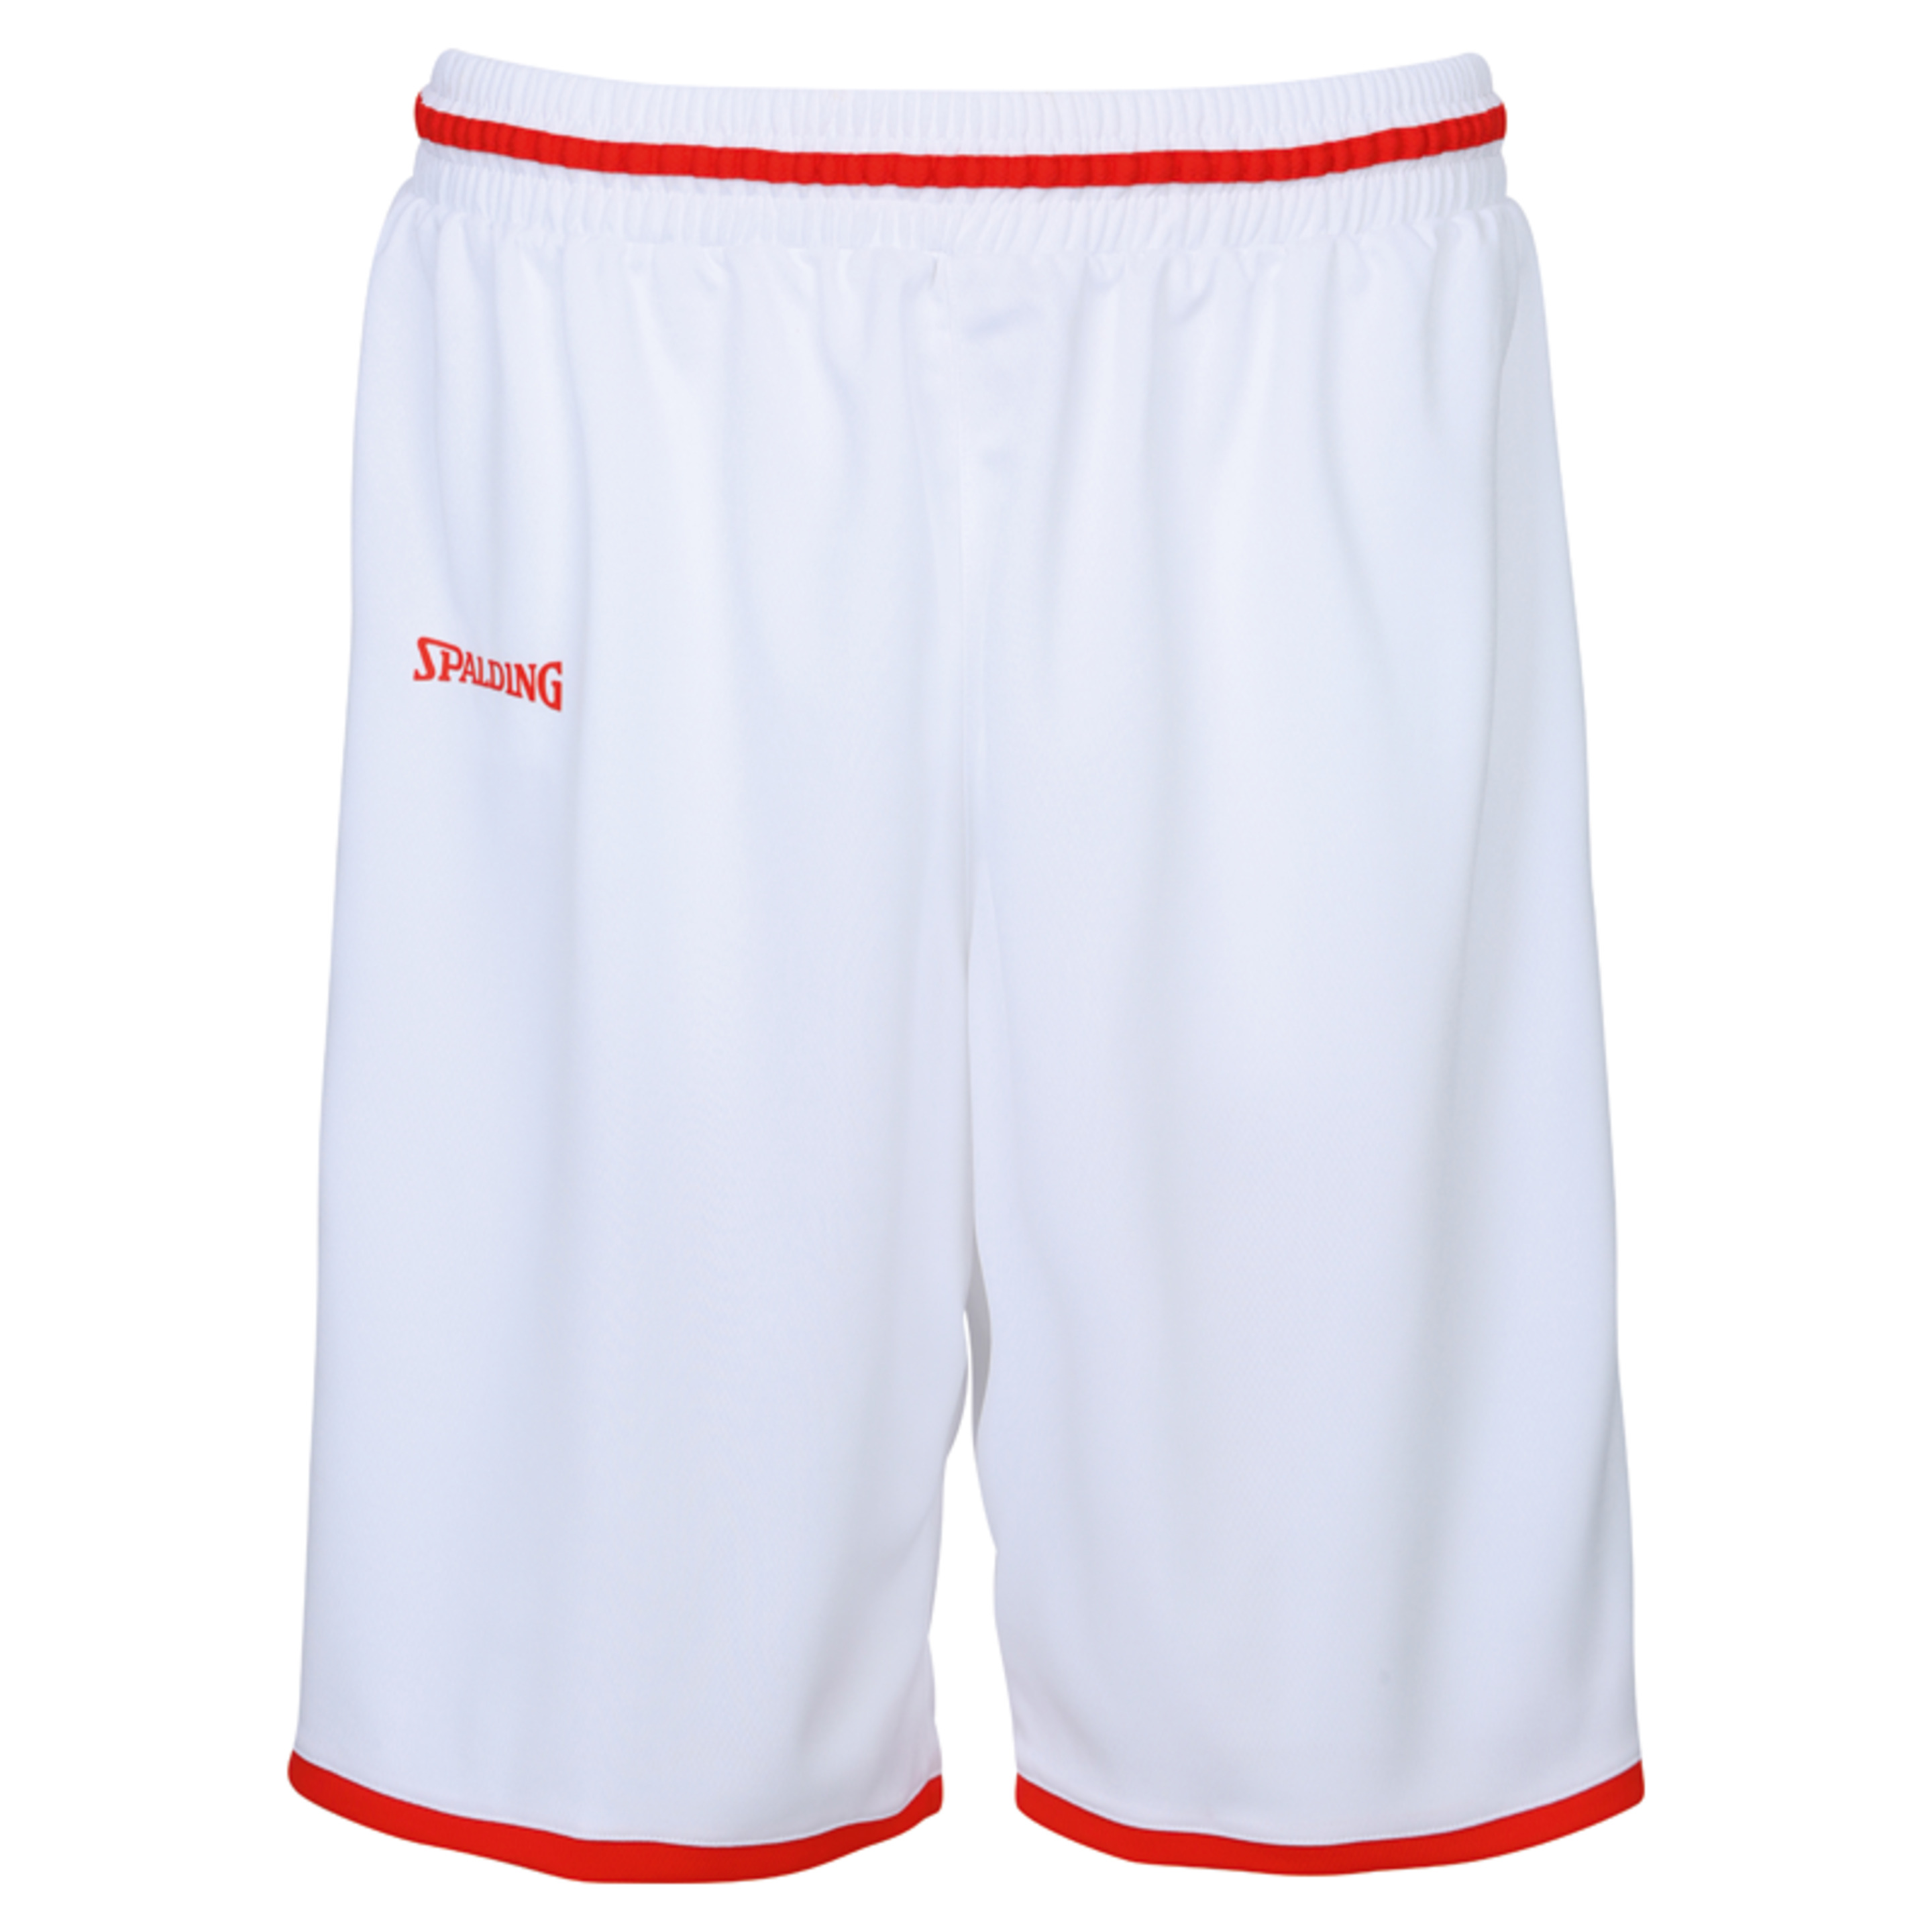 Move Shorts Blanco/rojo Spalding